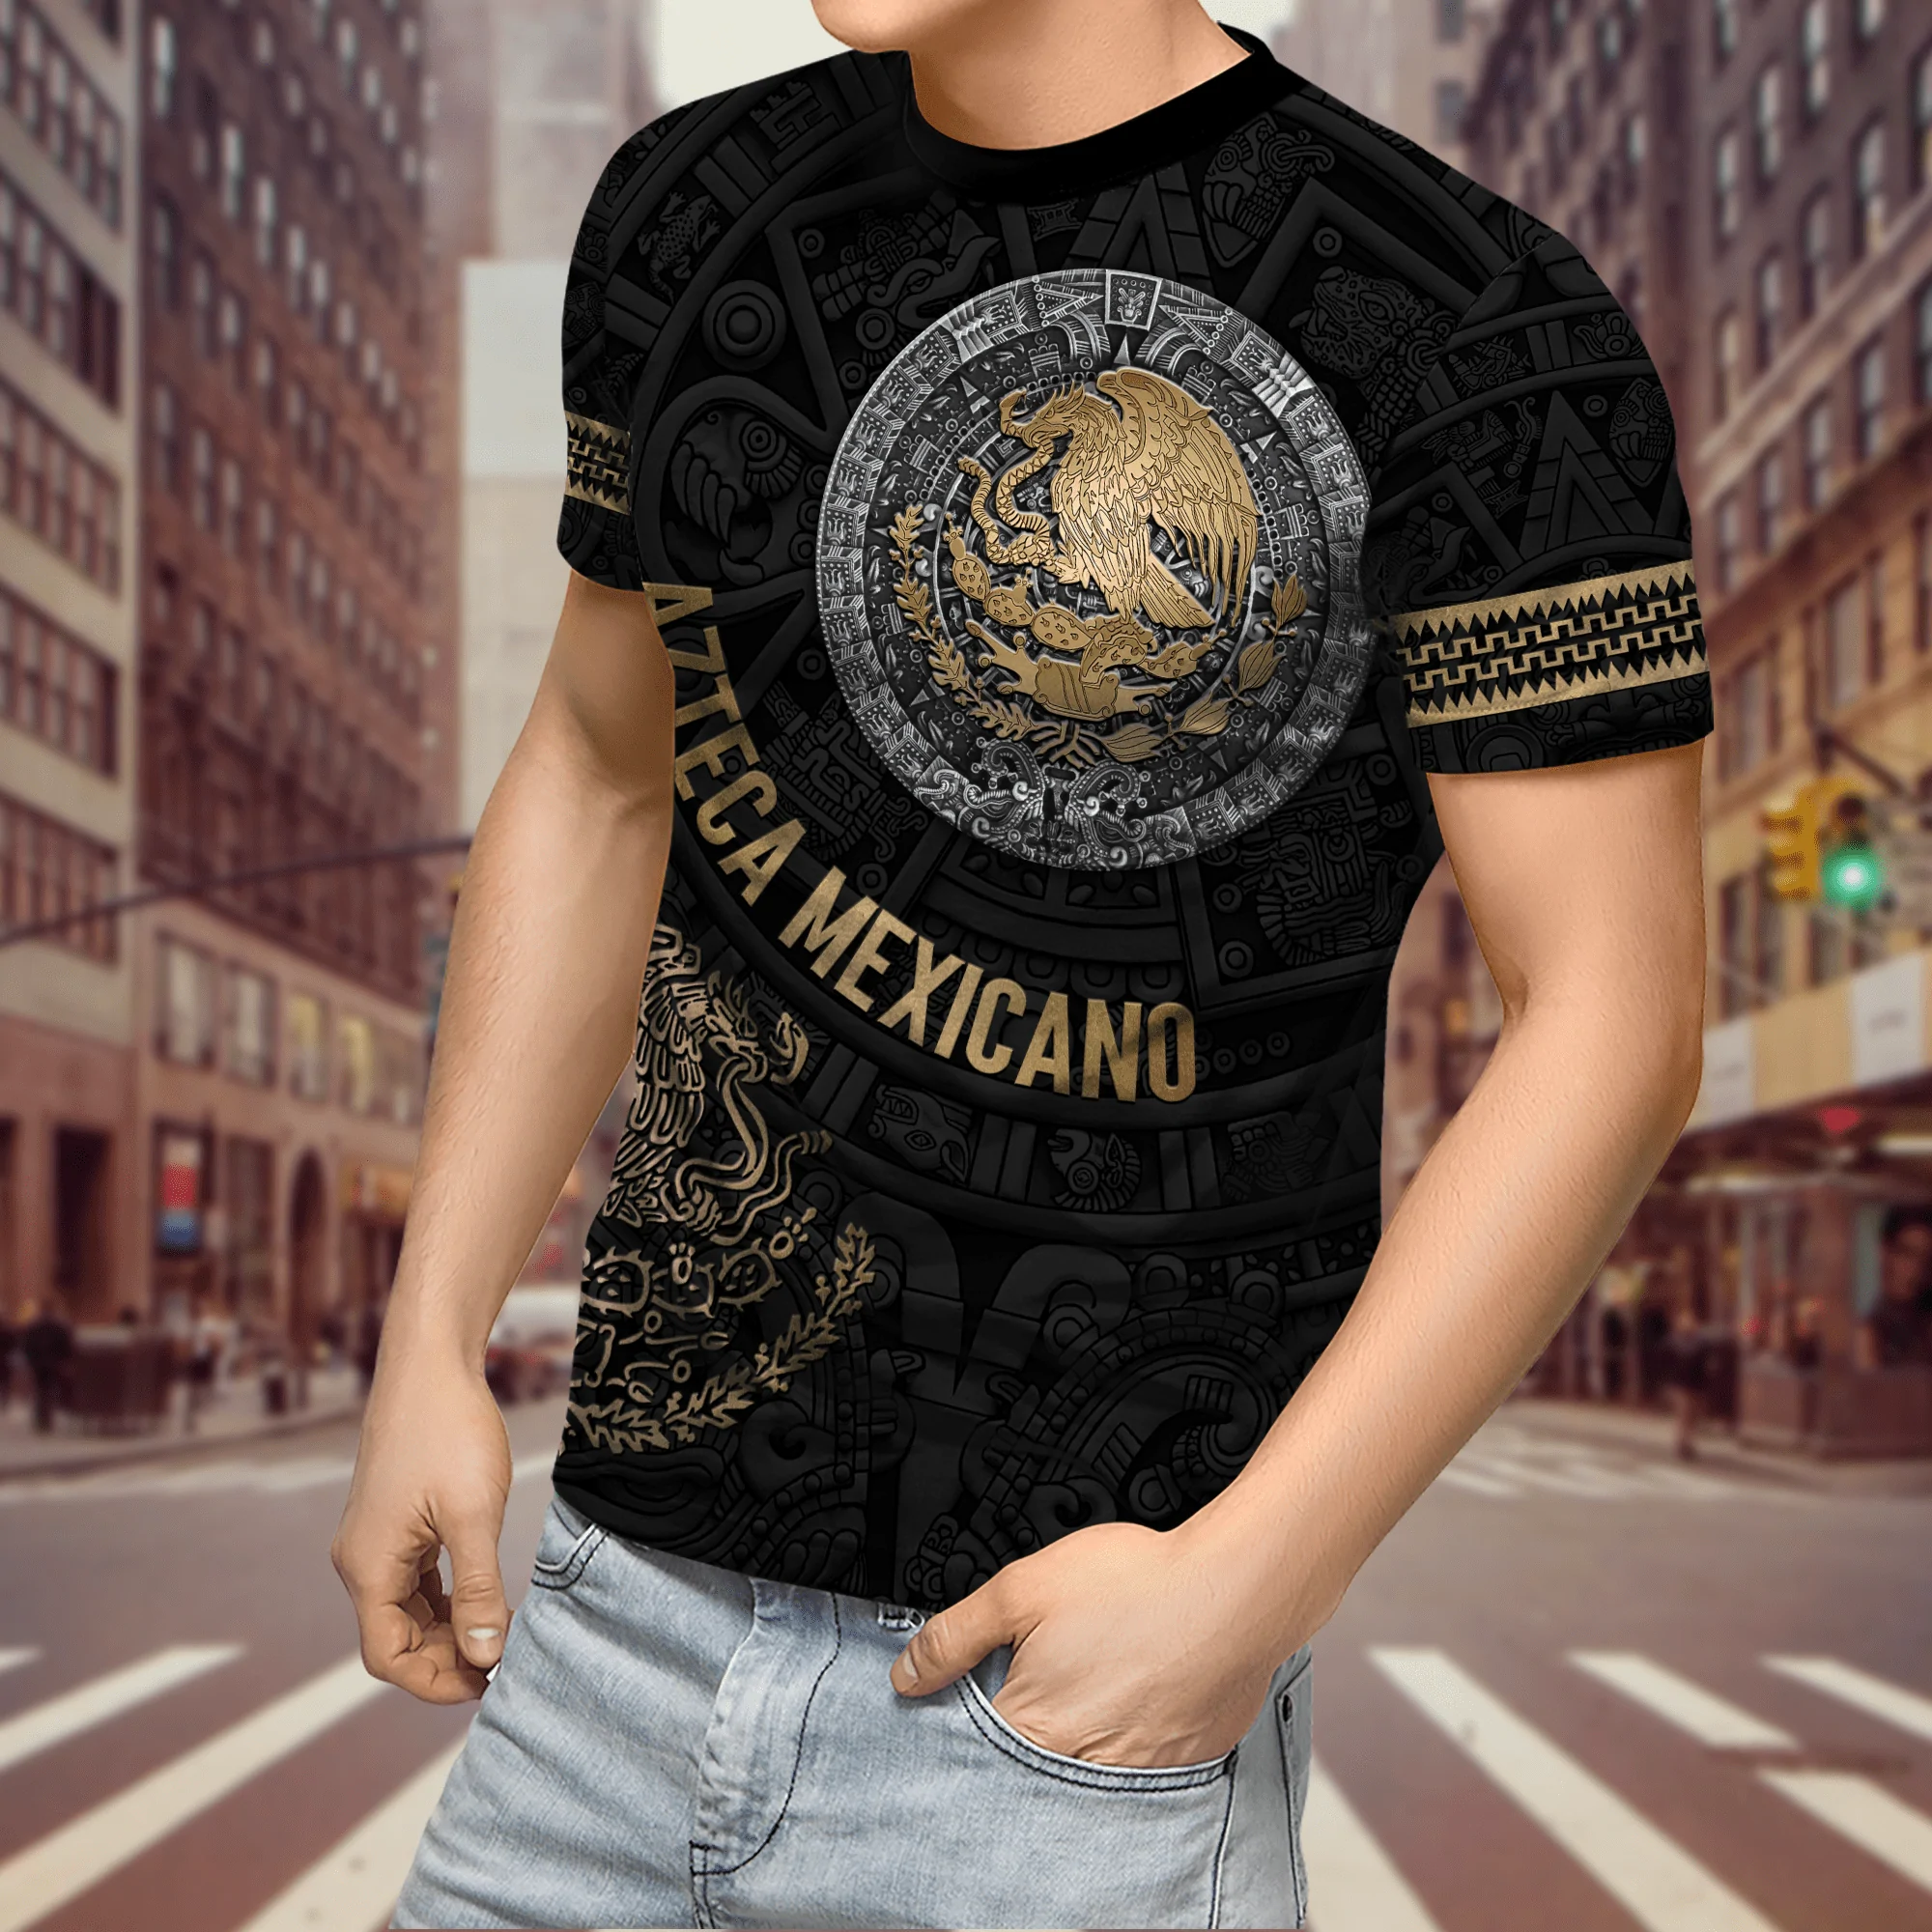 3D All Over Printed Black Azteca Shirt Aztec Mexicano Shirts Men Women Aztec Lover Gifts